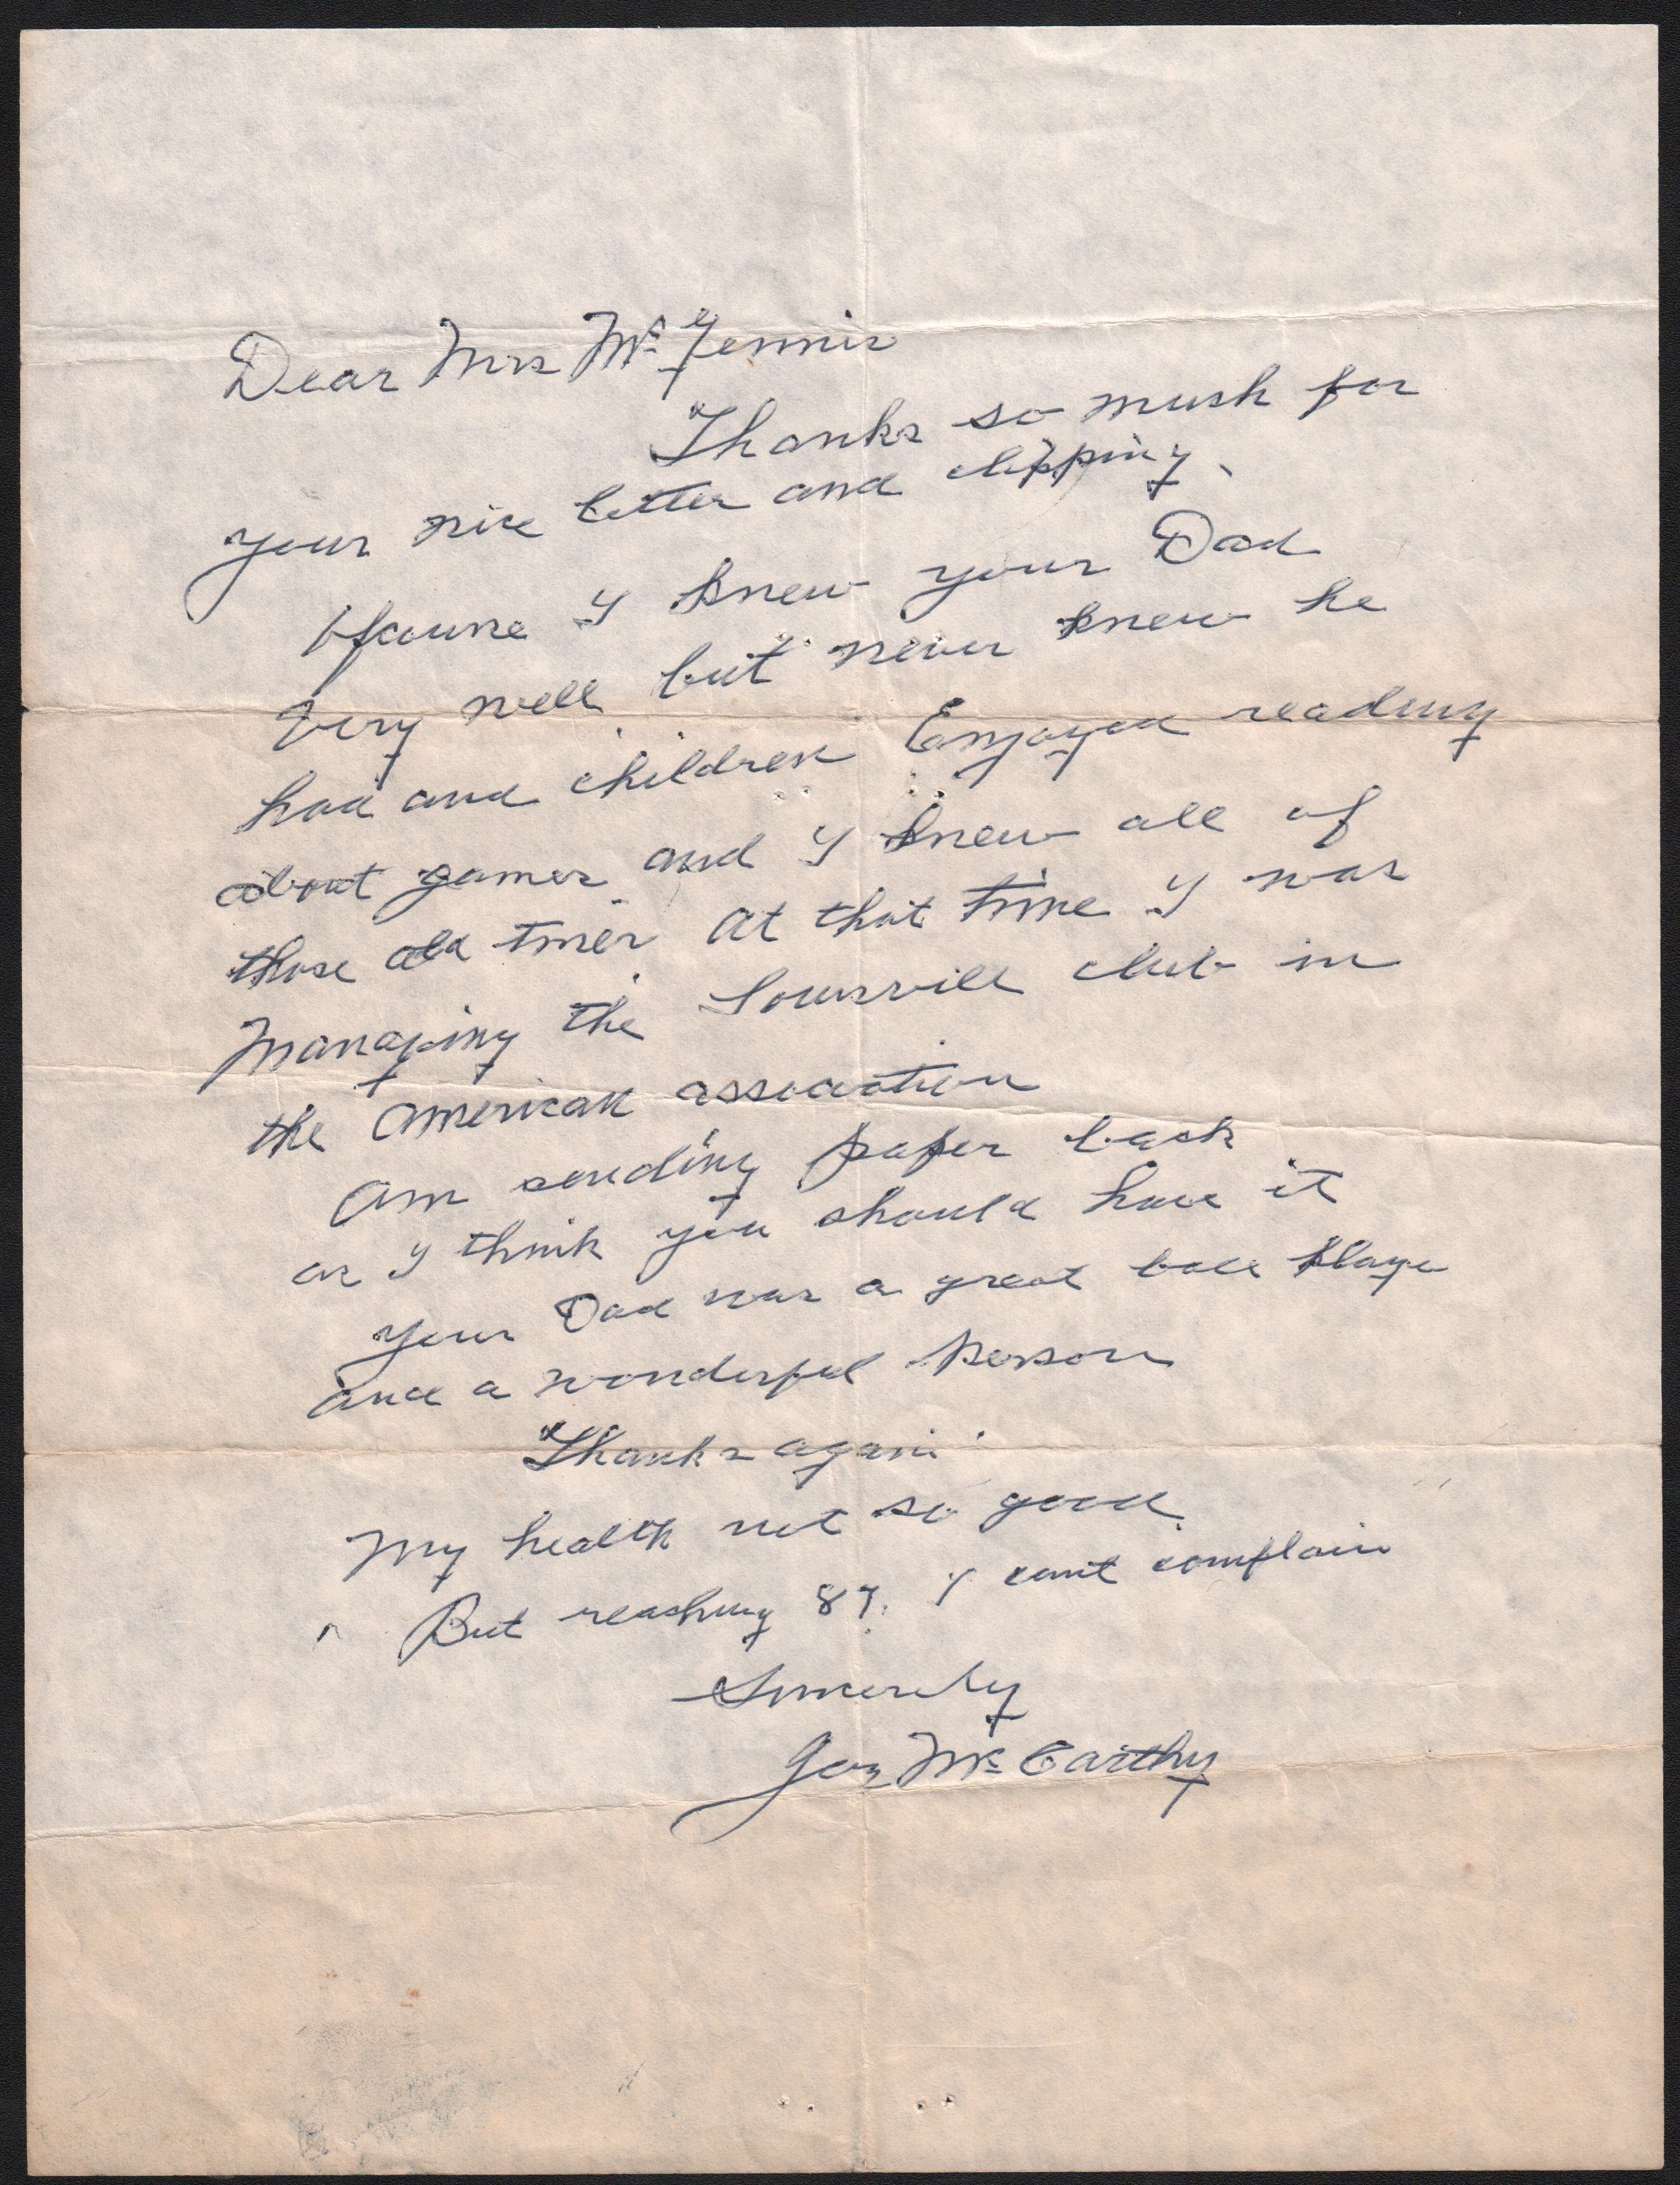 - Joe McCarthy Handwritten Letter Regarding Jumbo McGinnis